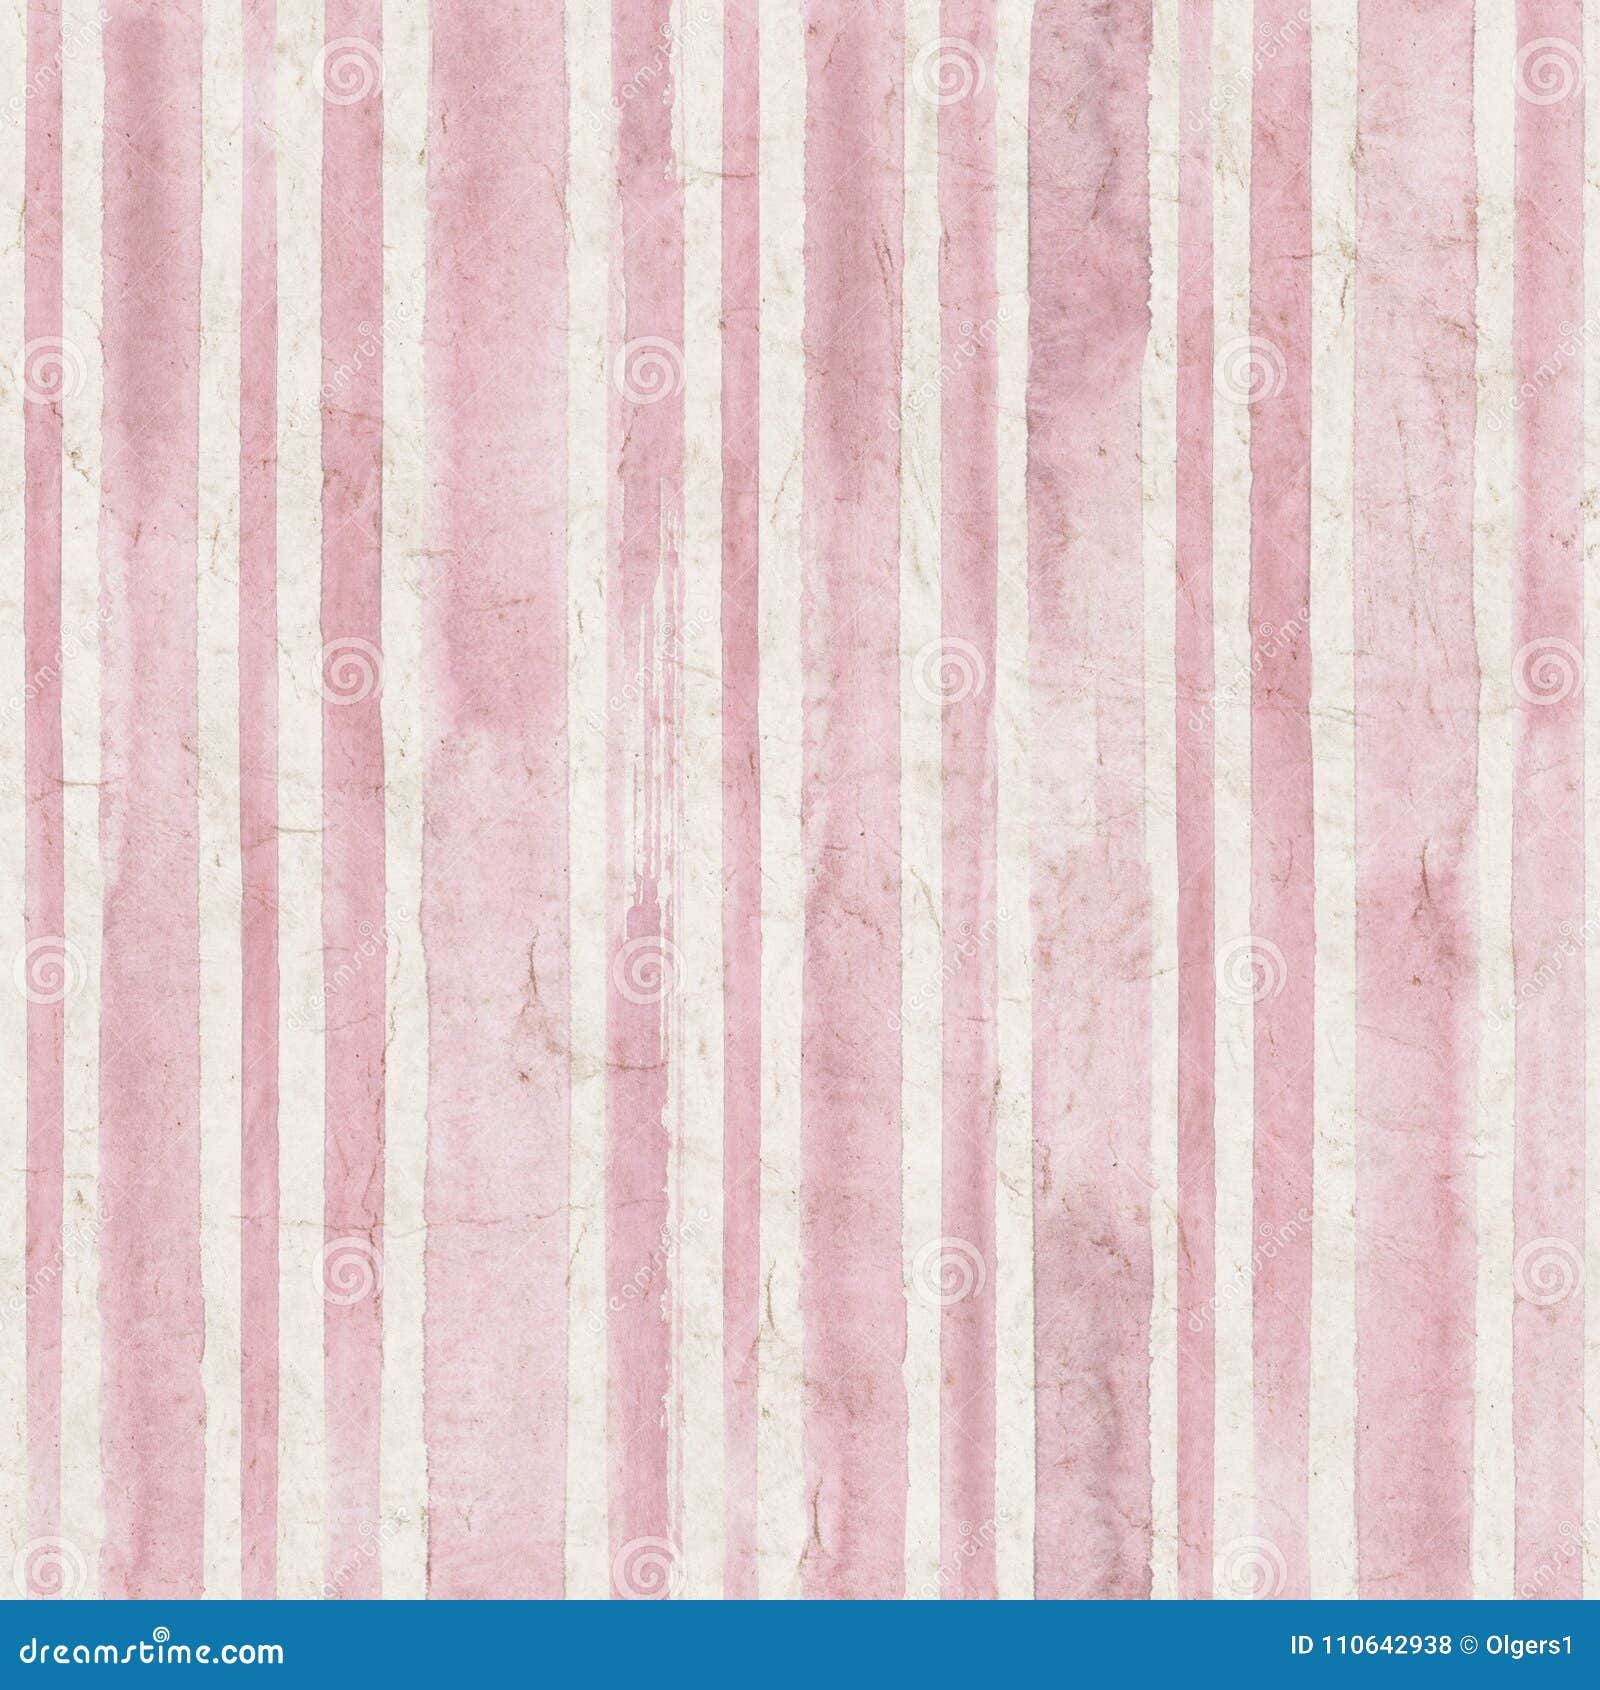 vintage stripe background. seamless pattern